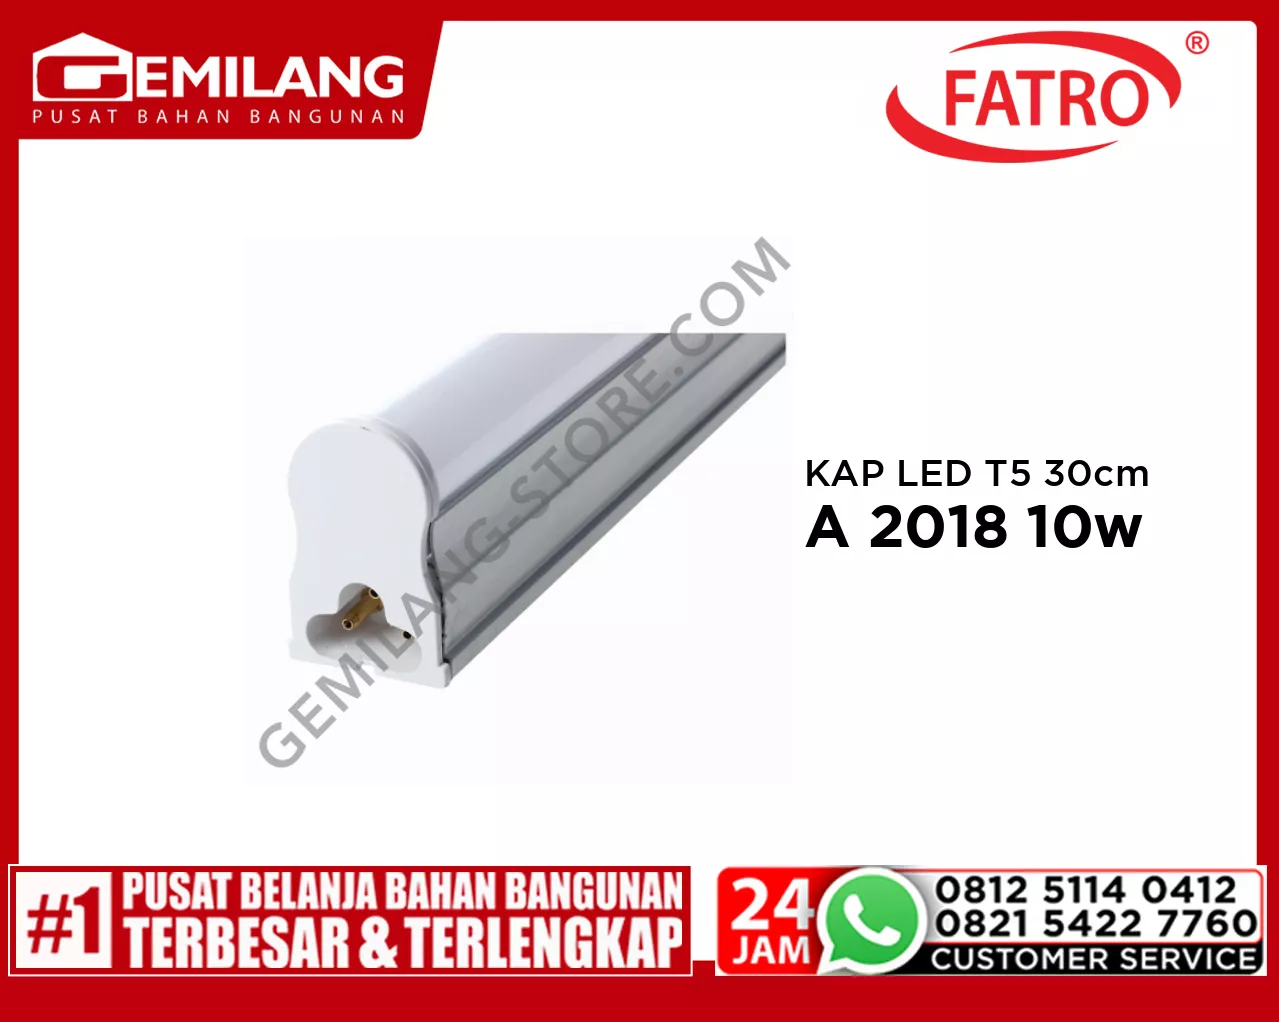 FATRO KAP LED T5 60cm GREEN SA 2018 10w